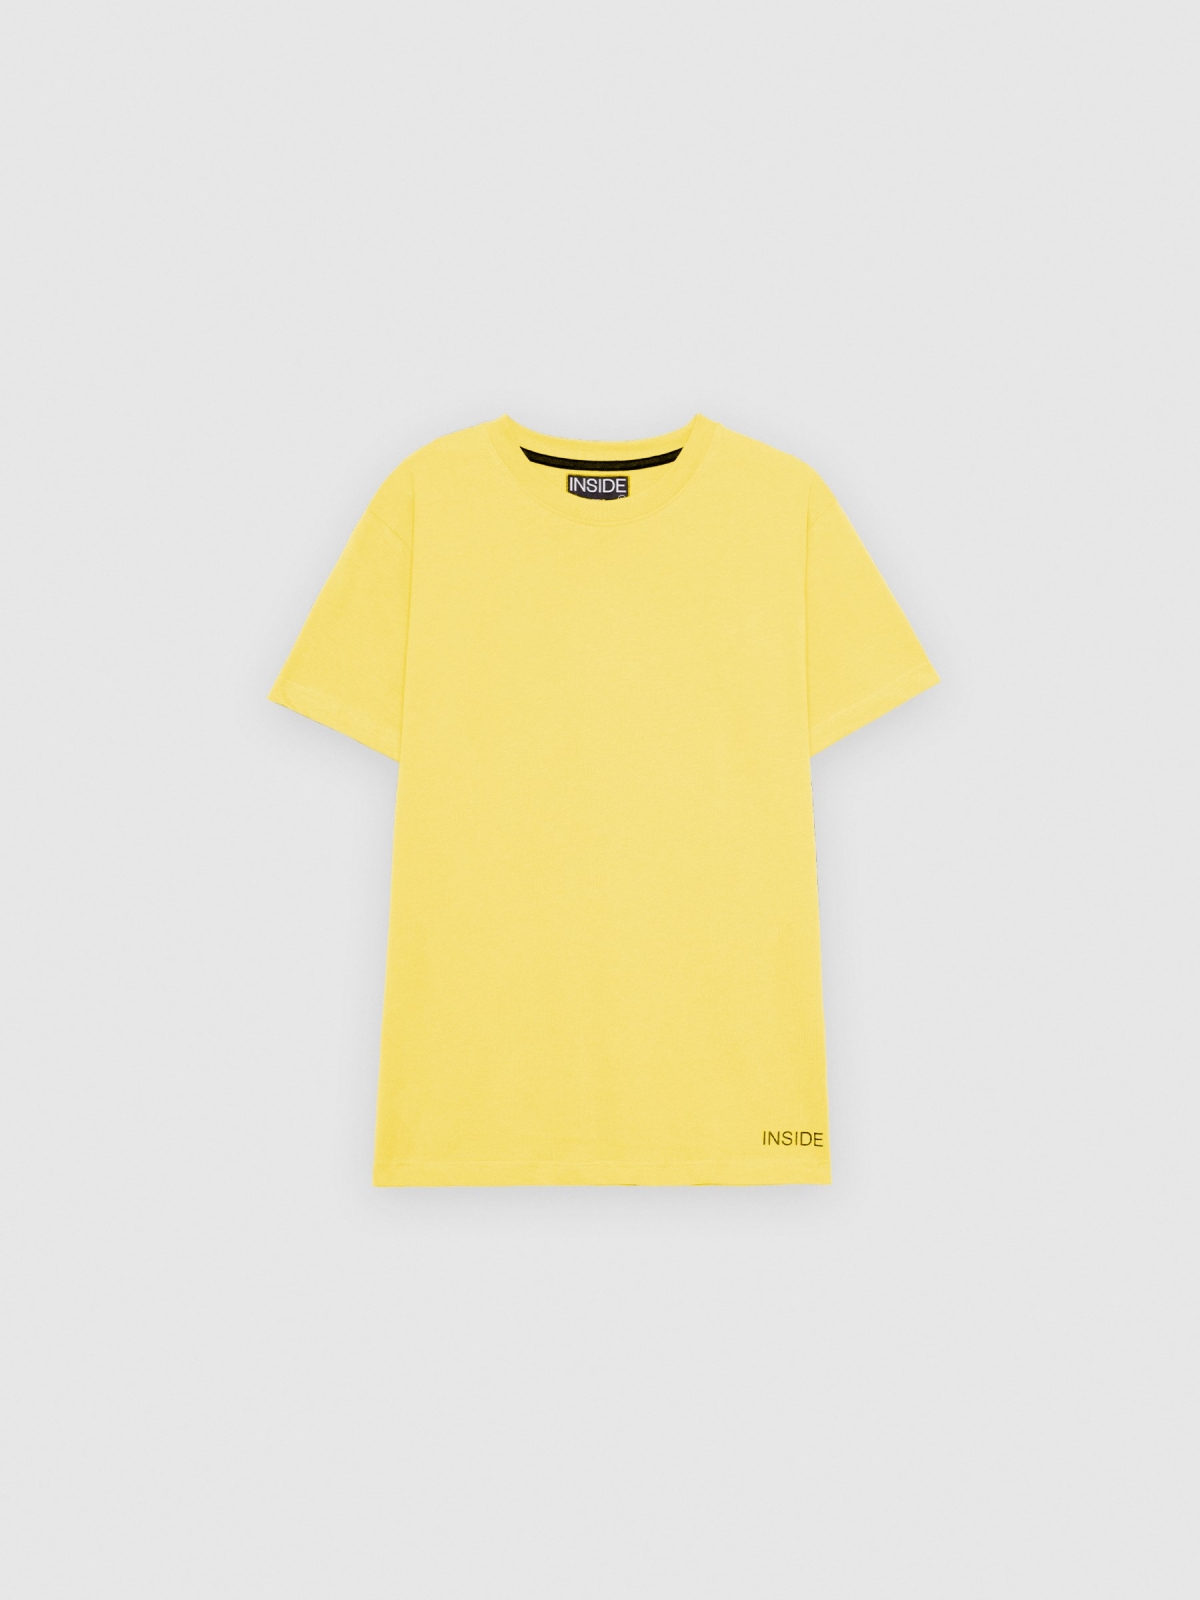  Camiseta básica manga corta amarillo